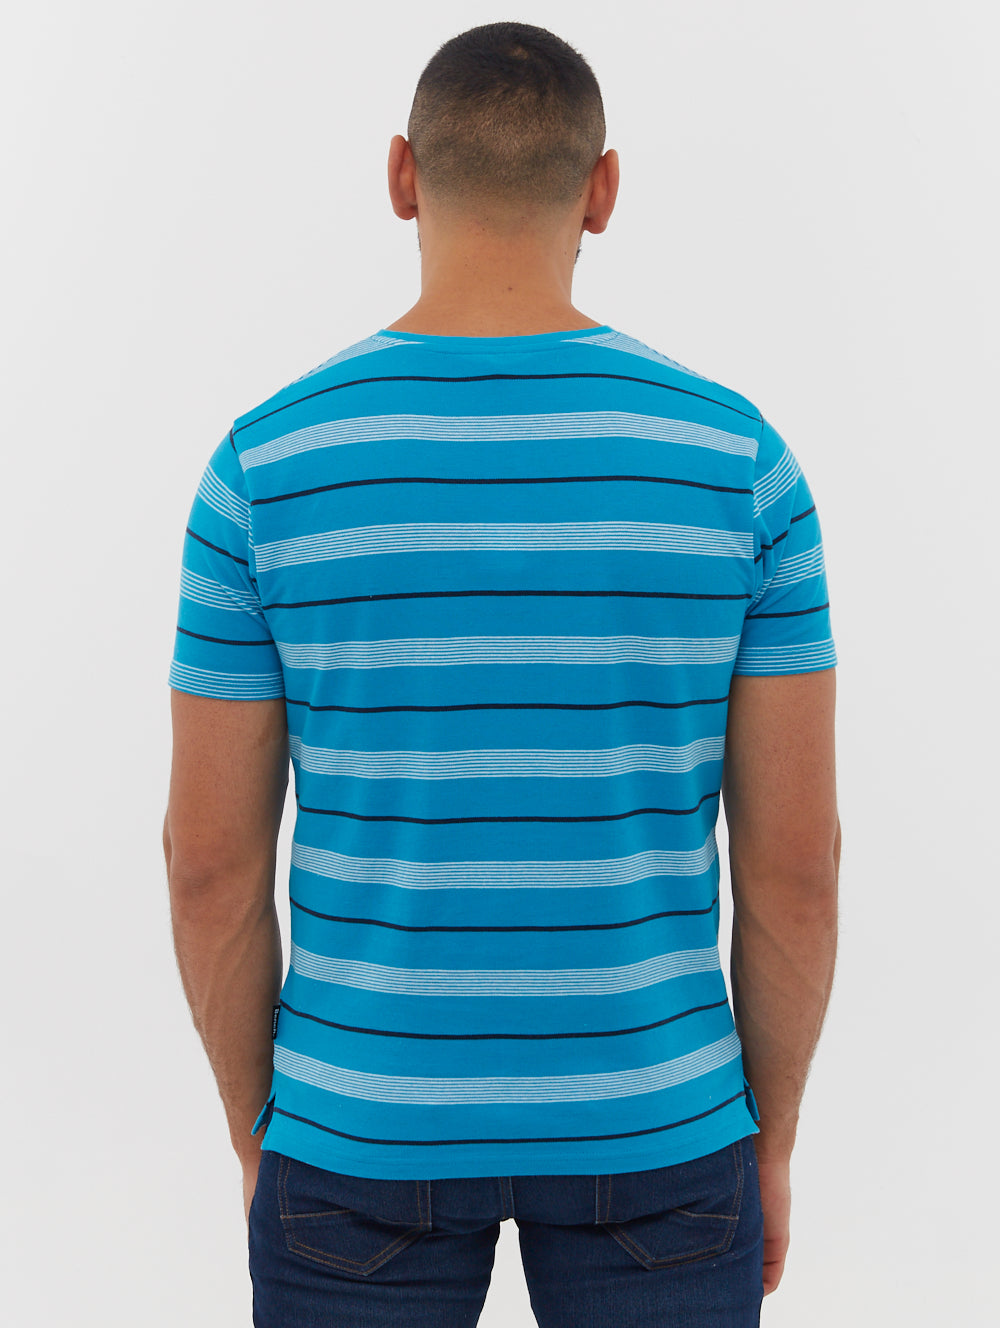 Milos Striped T-Shirt - BN2A126639